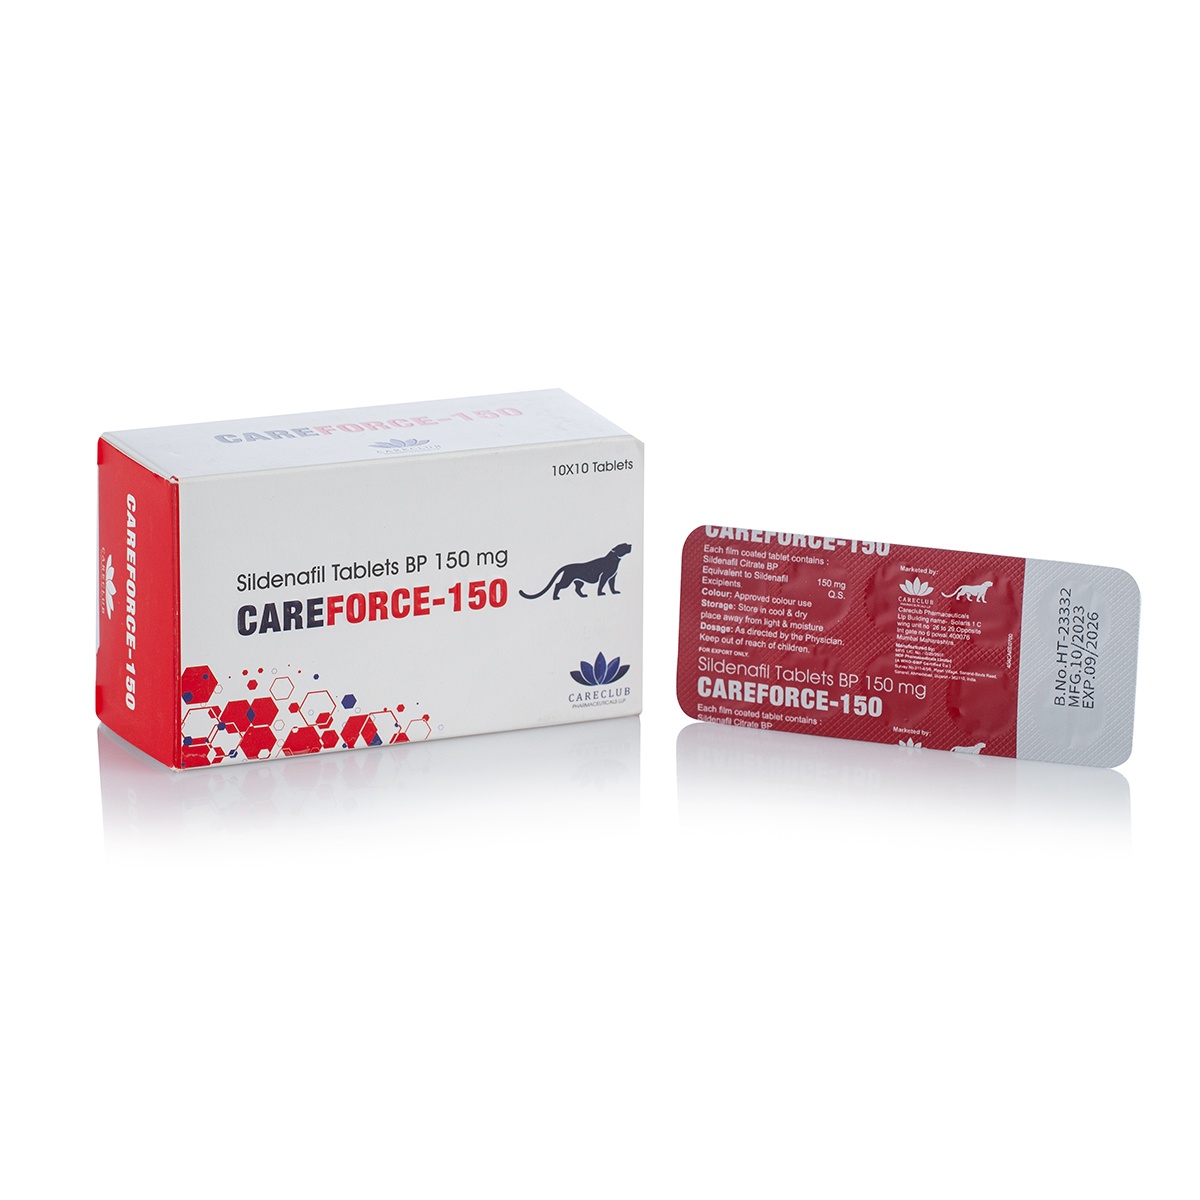 Careforce-150 (Sildenafil) 10 табл. х 150 мг.